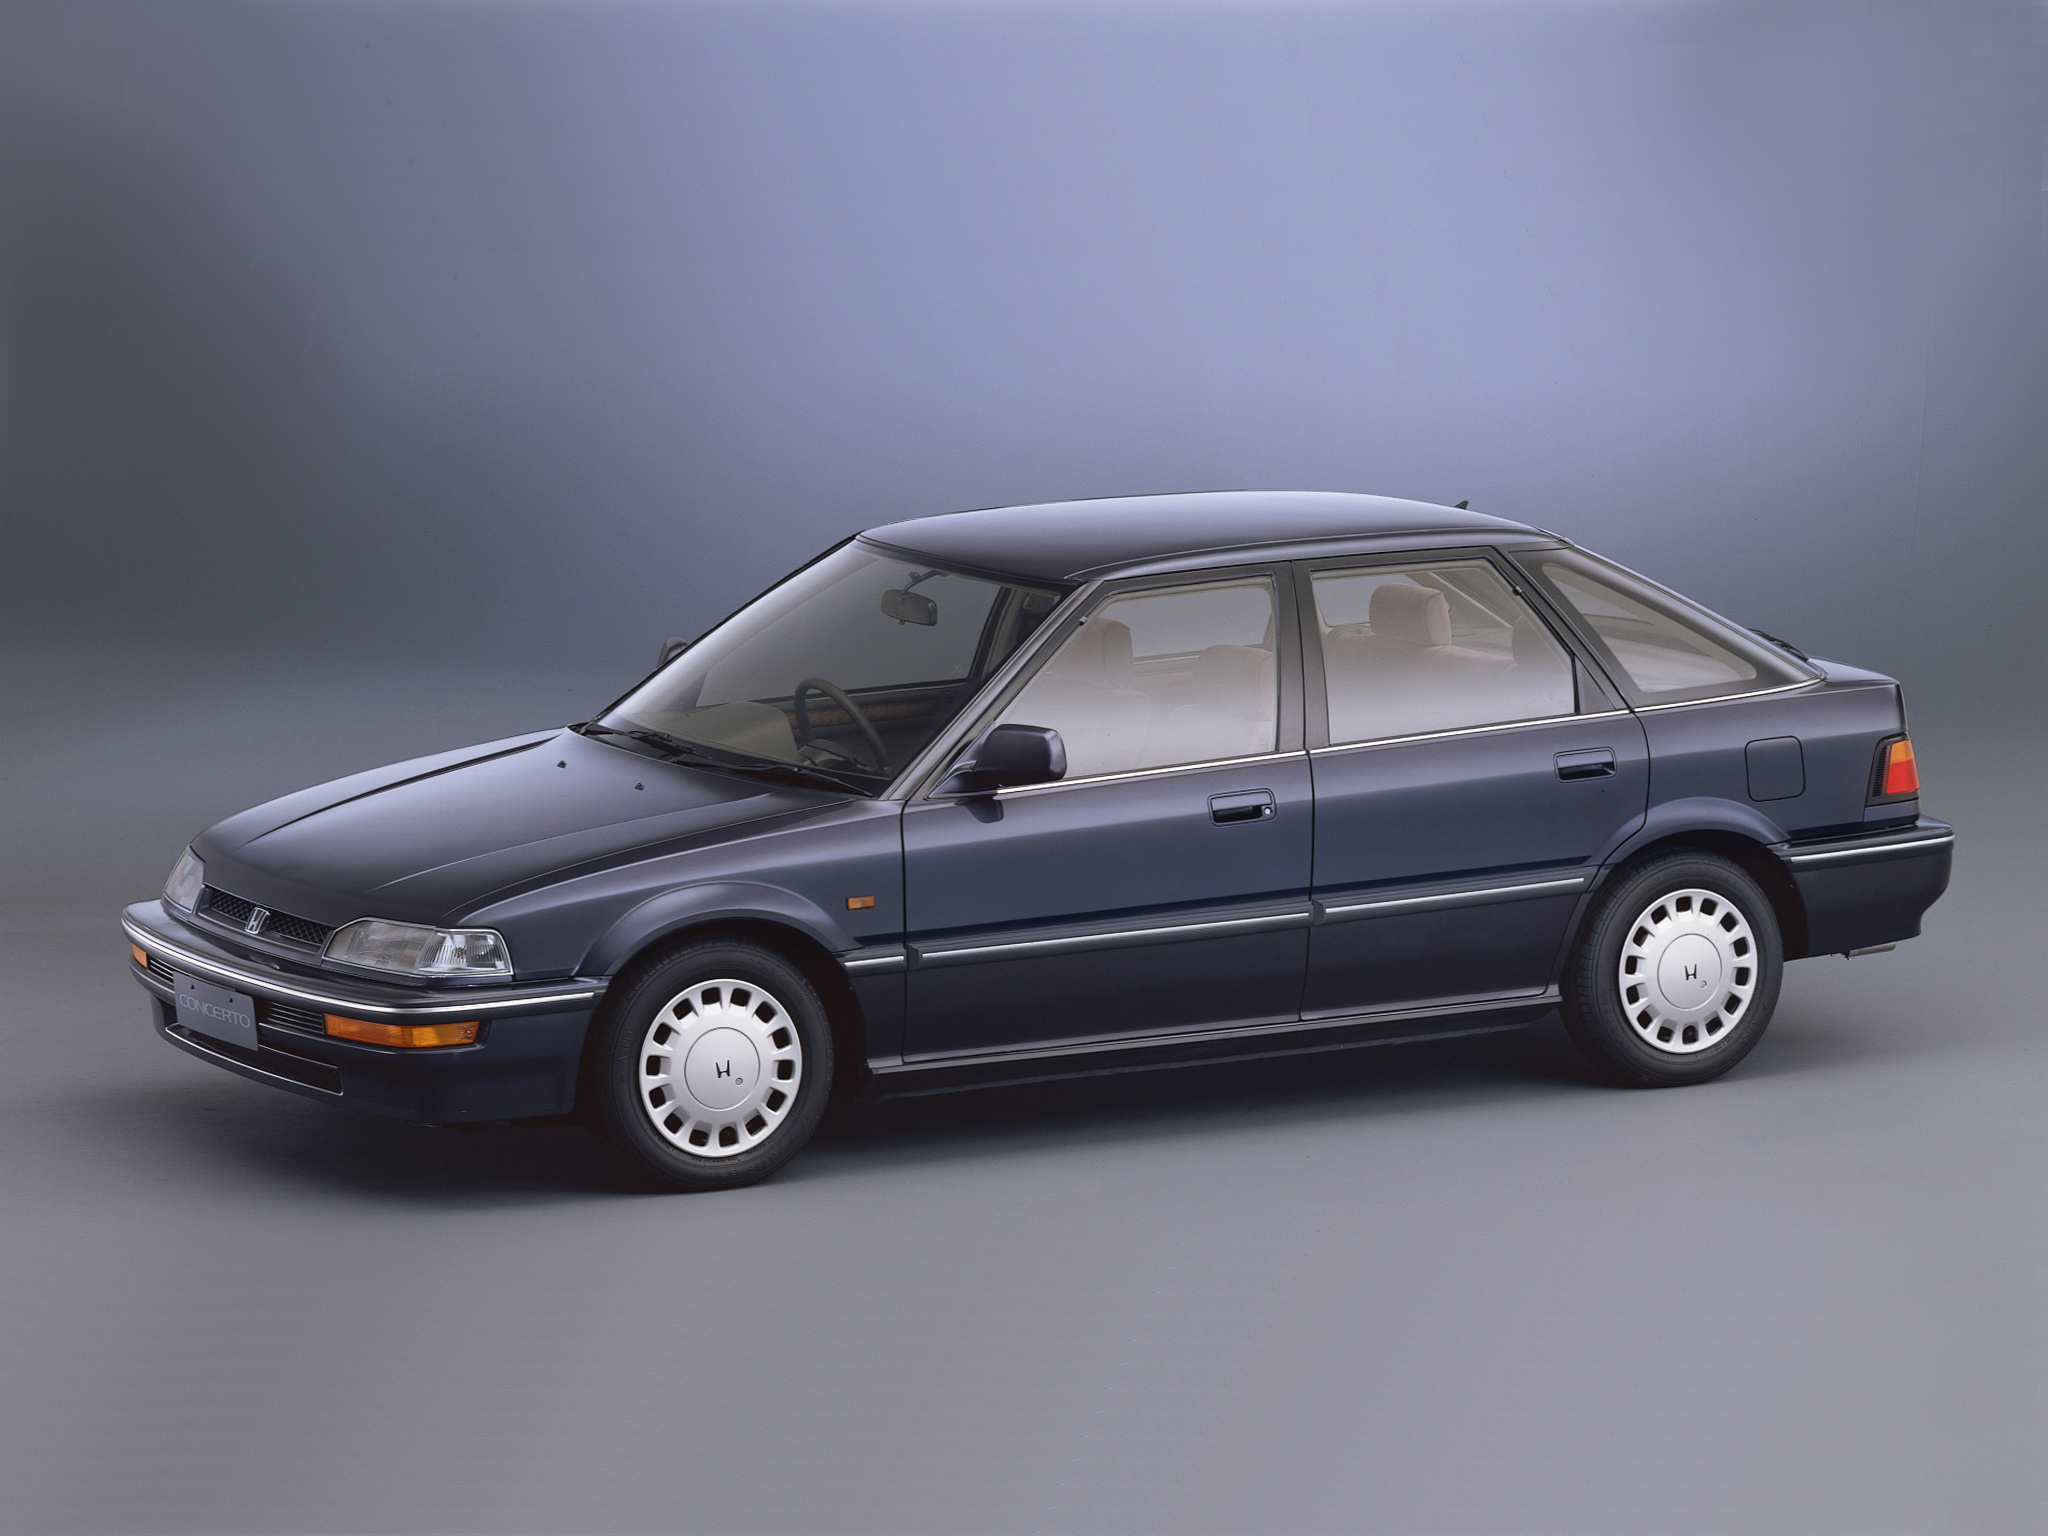 Honda History 歴代ホンダ車 1980年代 Part 19年 コンチェルト 5door セダン Jx I 19年 アコード 2 0si 19年 ビガー Type X 19年 Mugen Honda Cr X Sir Pro 2 Ef8 海の日 に因んで青色のクルマを貼ろう T Co 4n8o1ddfxc Twitter